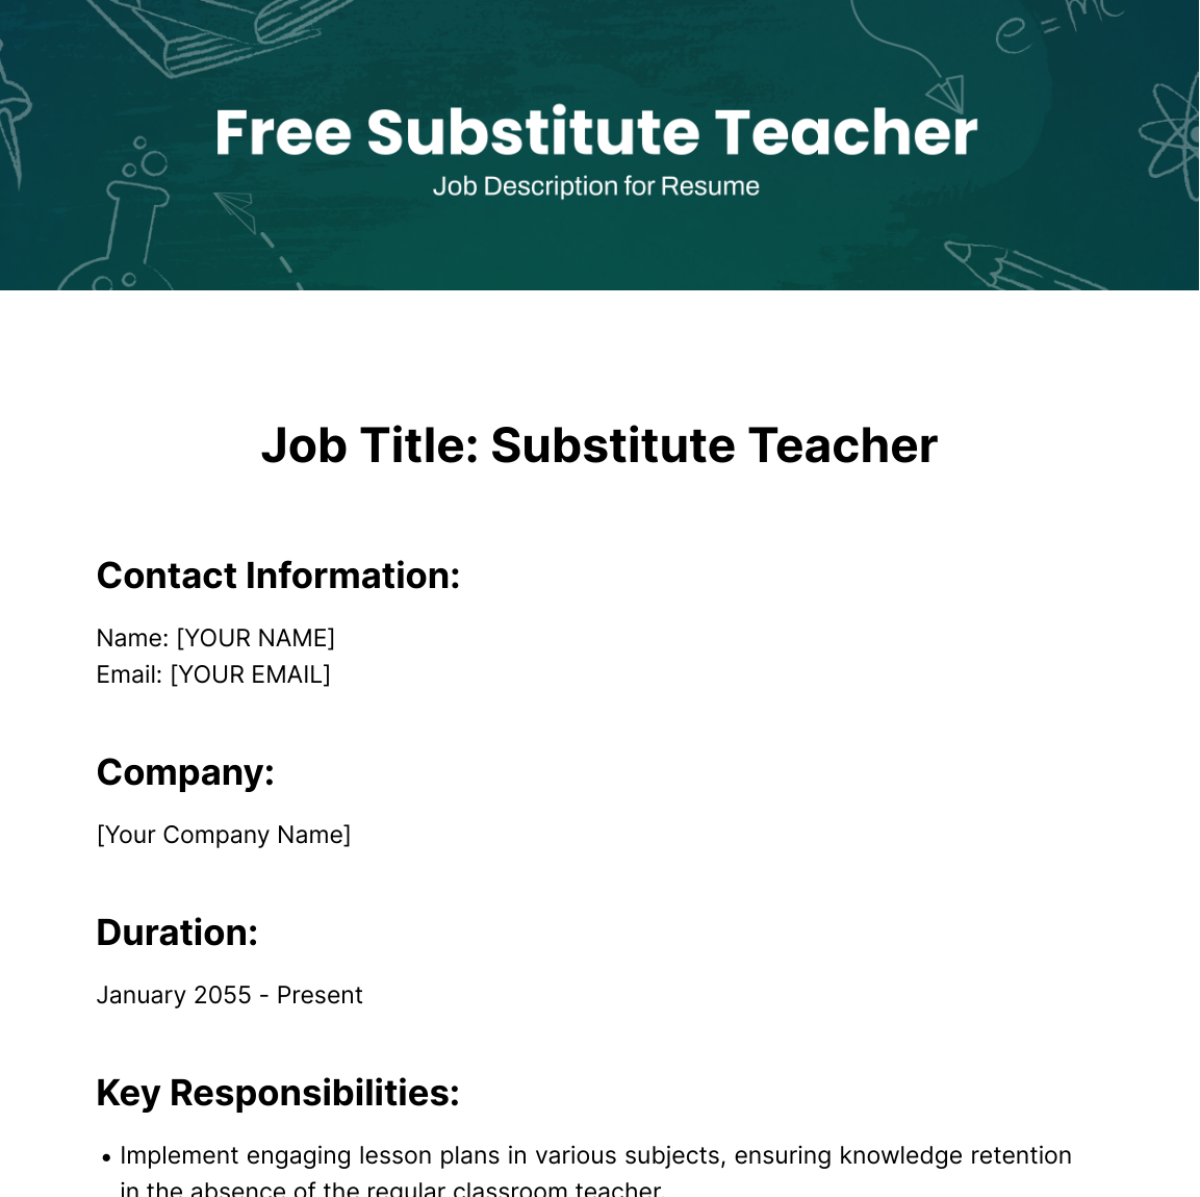 Substitute Teacher Job Description for Resume Template